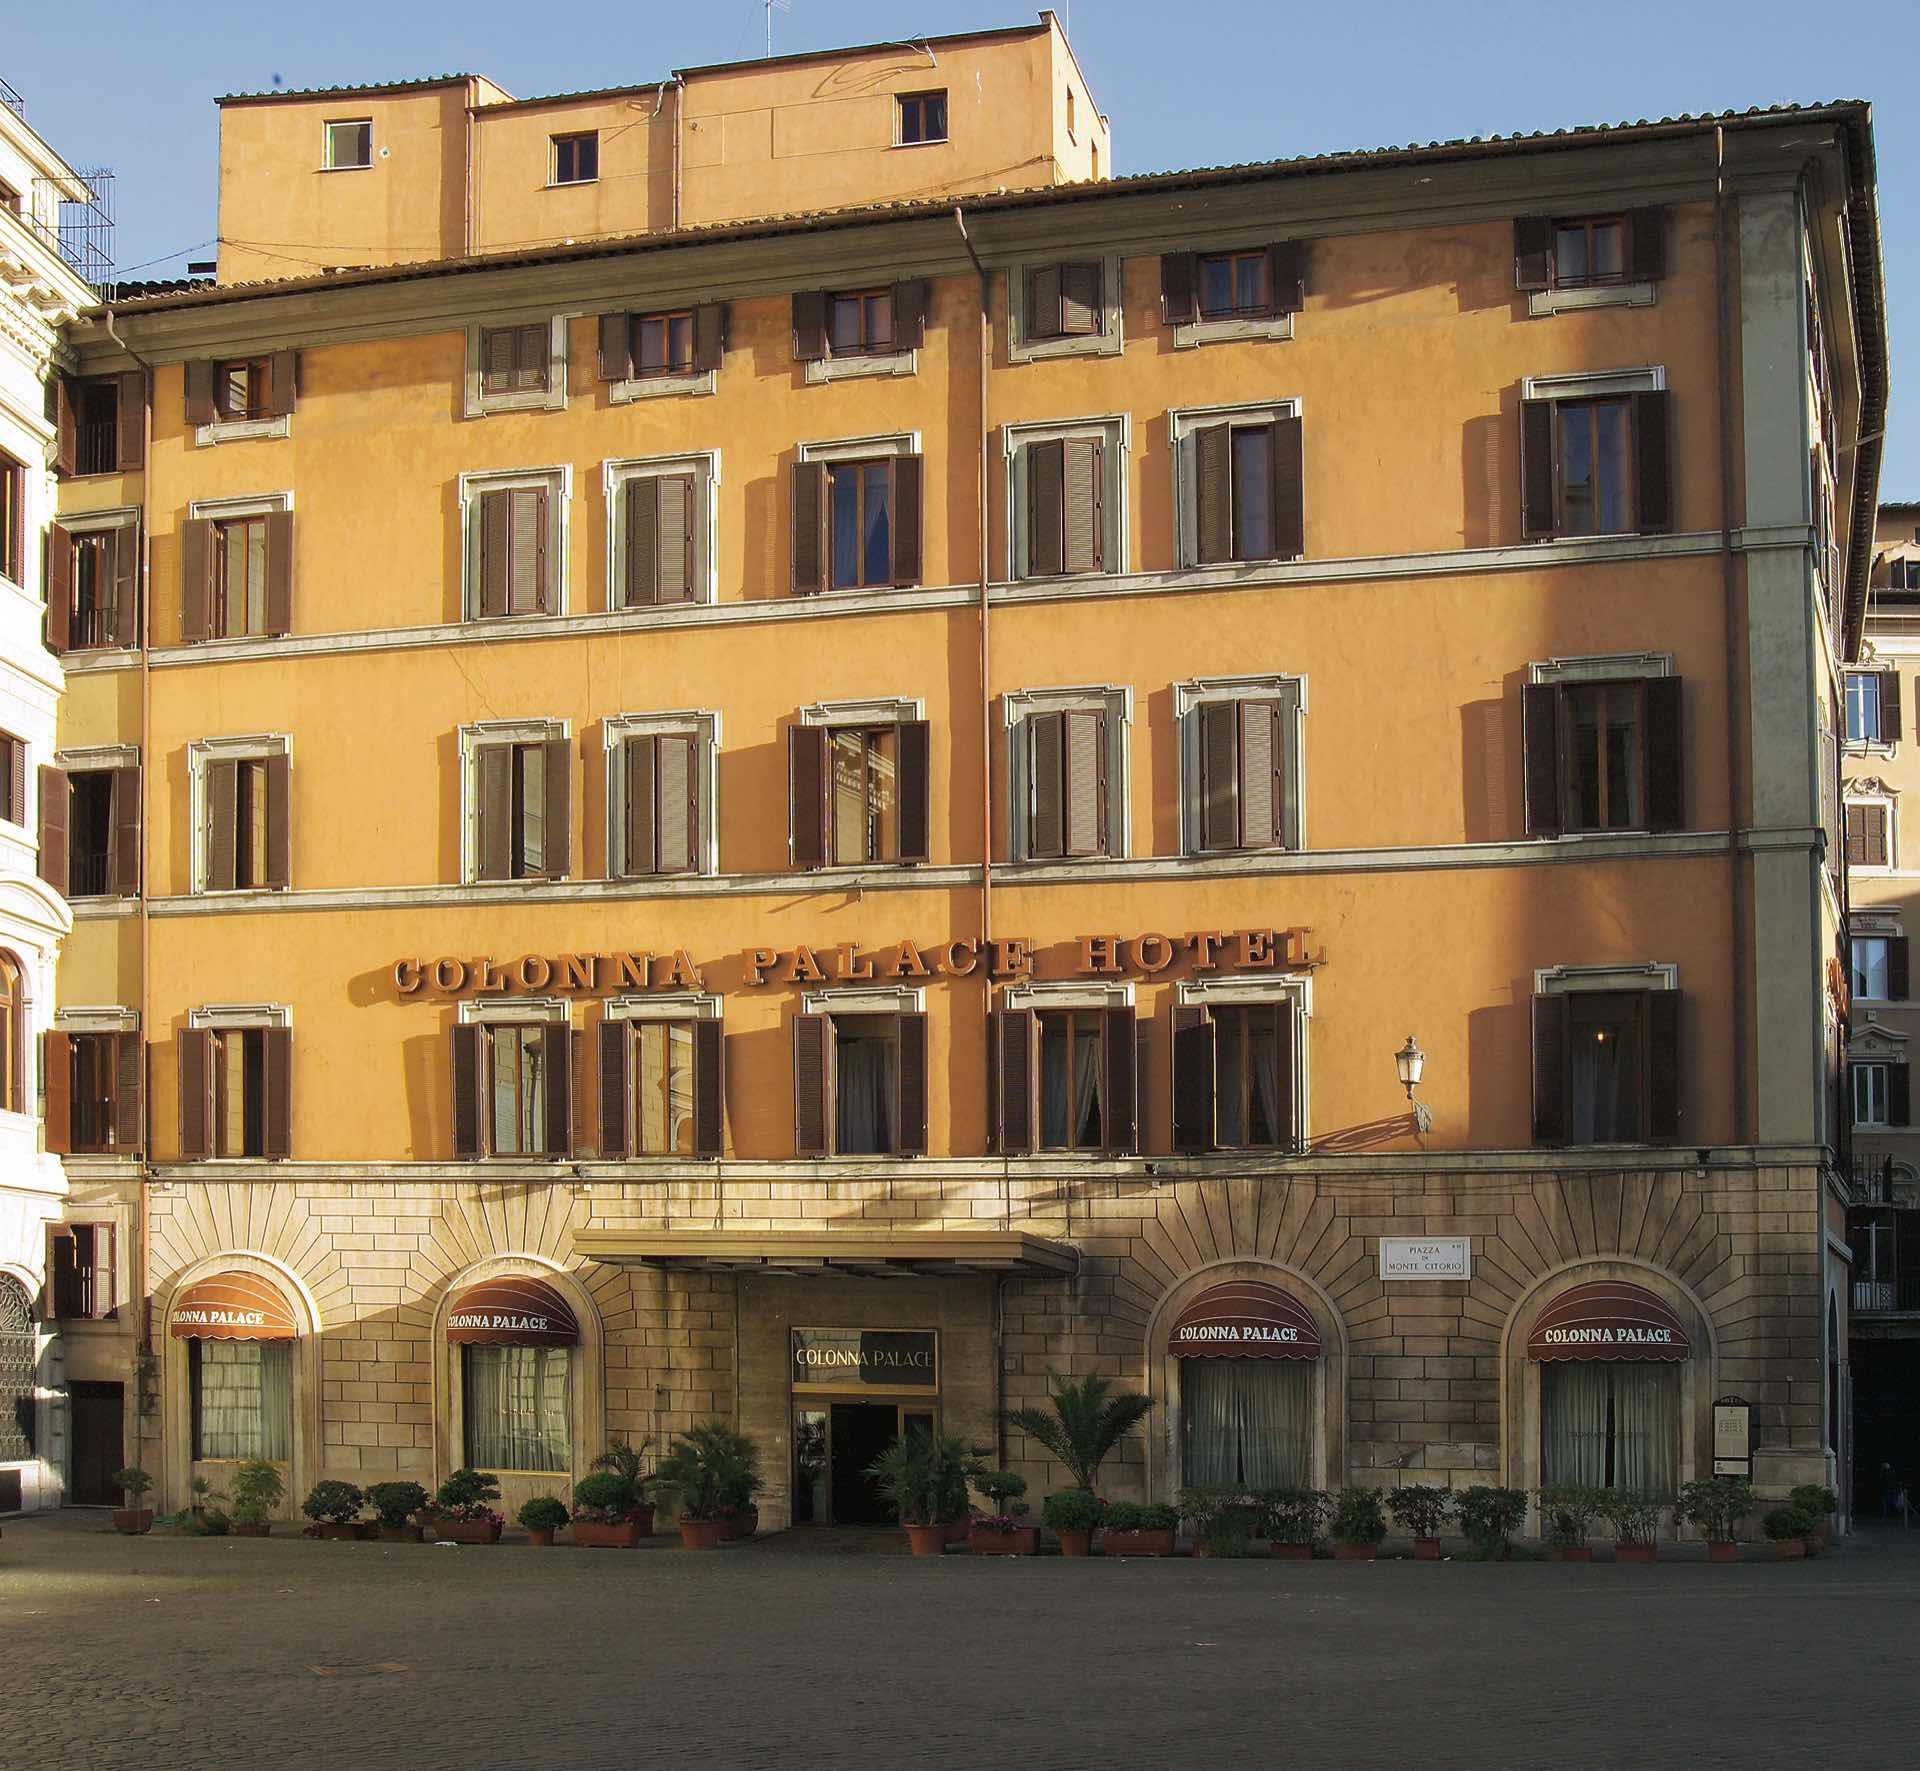 Colonna Palace